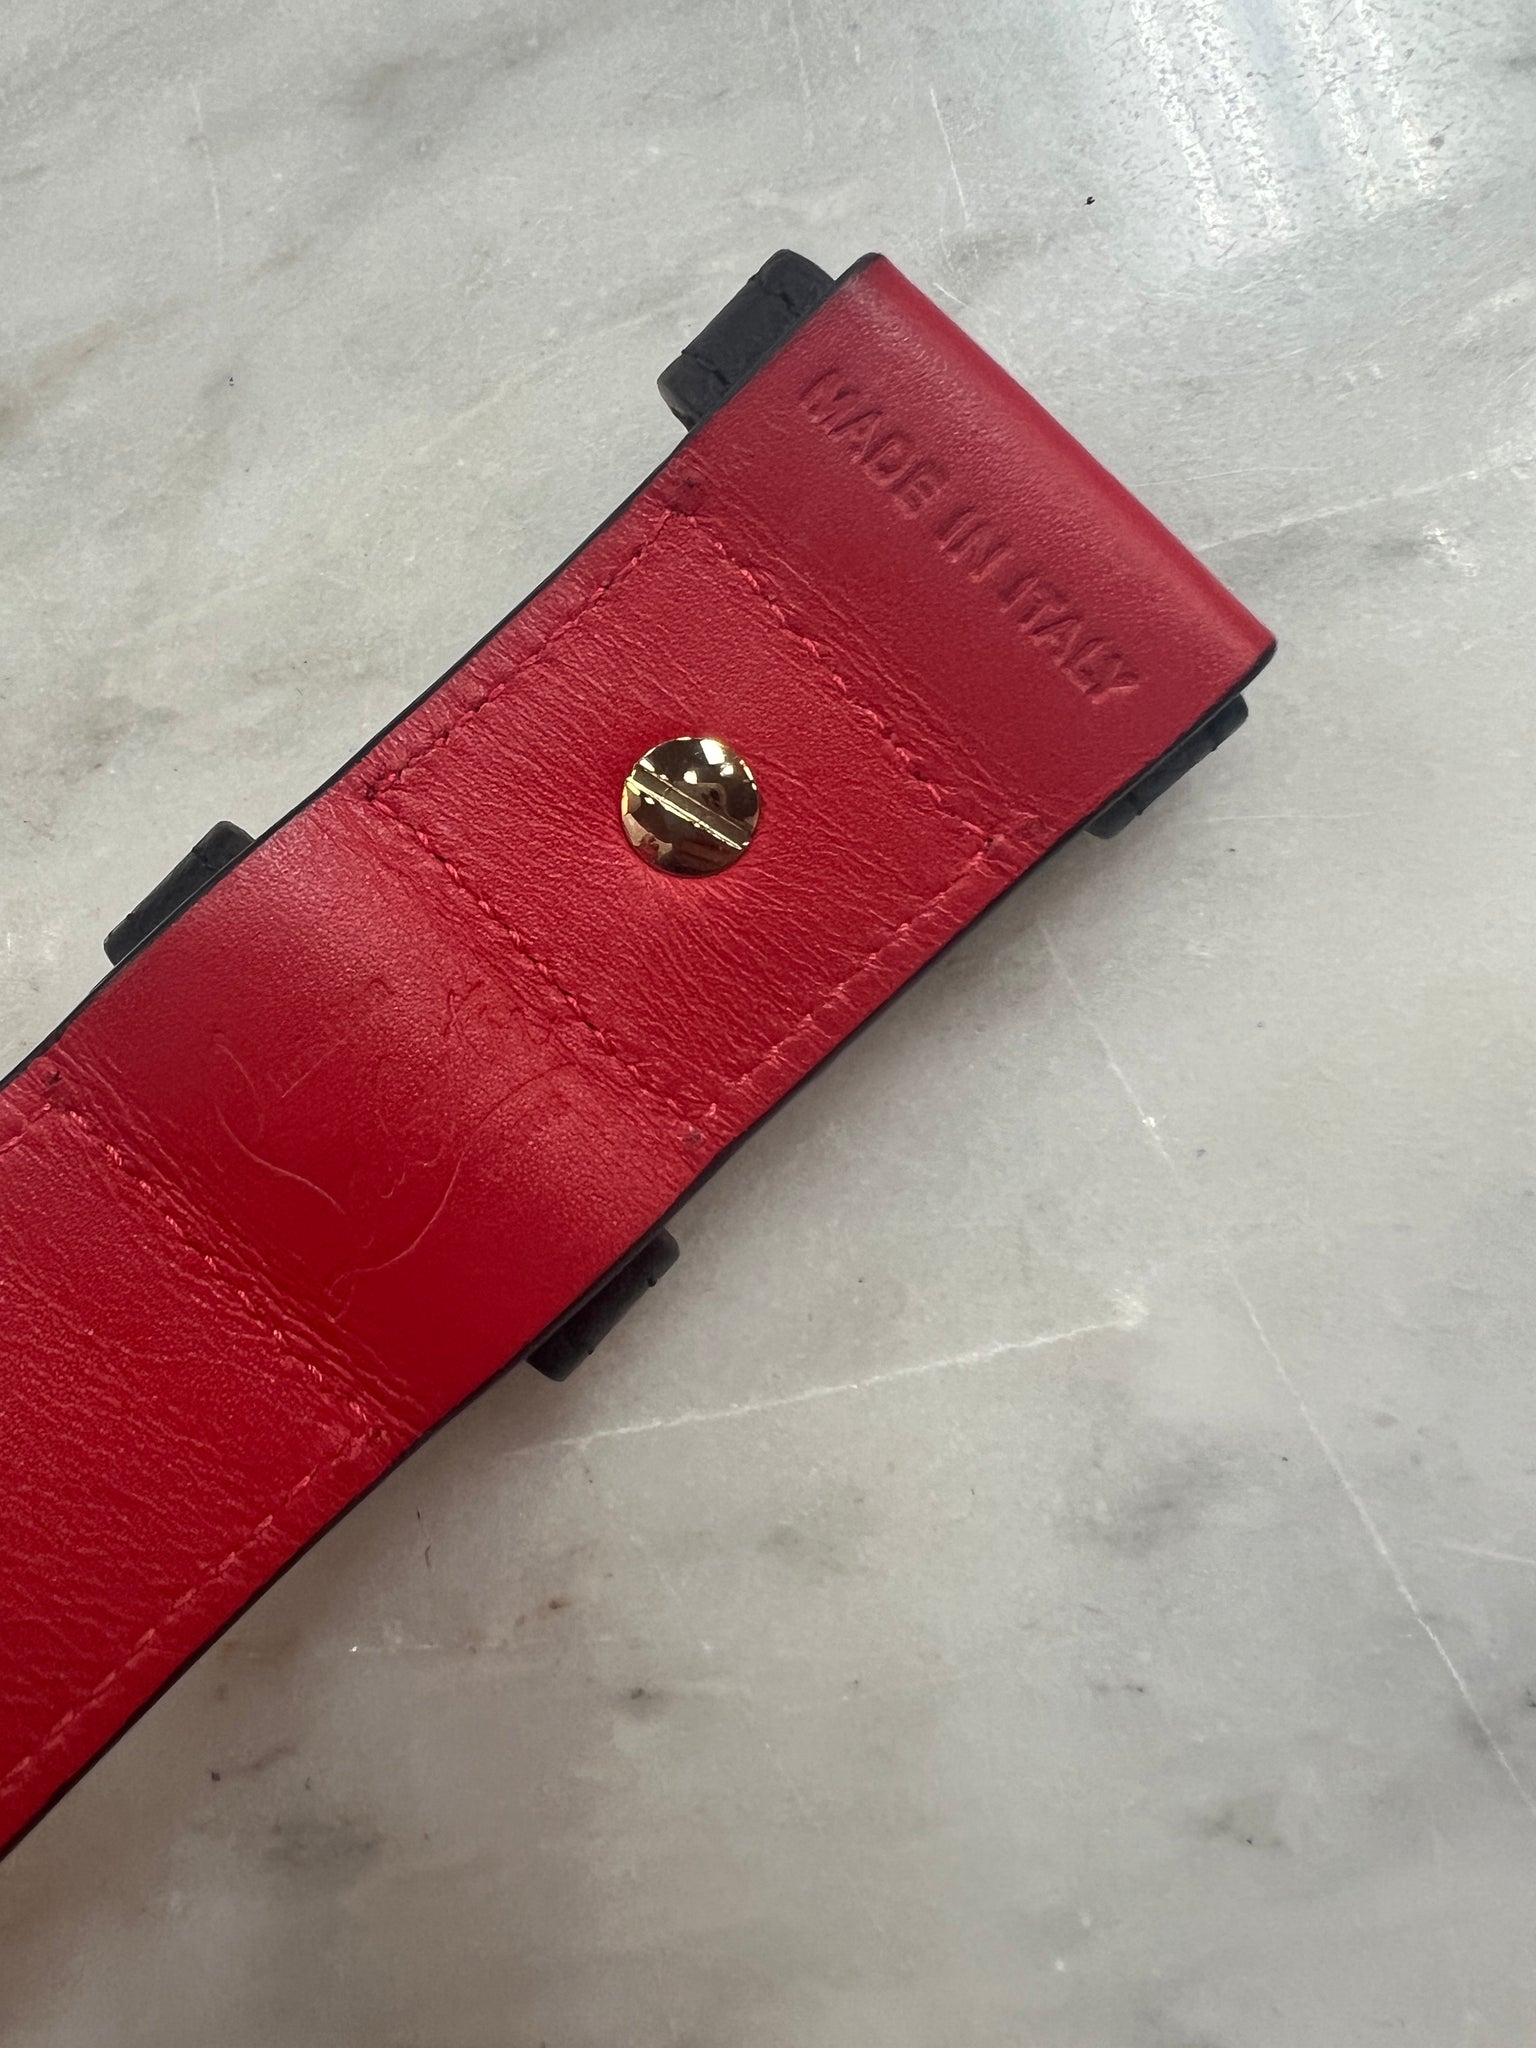 Christian Louboutin, Boudoir leopard printed leather belt bag